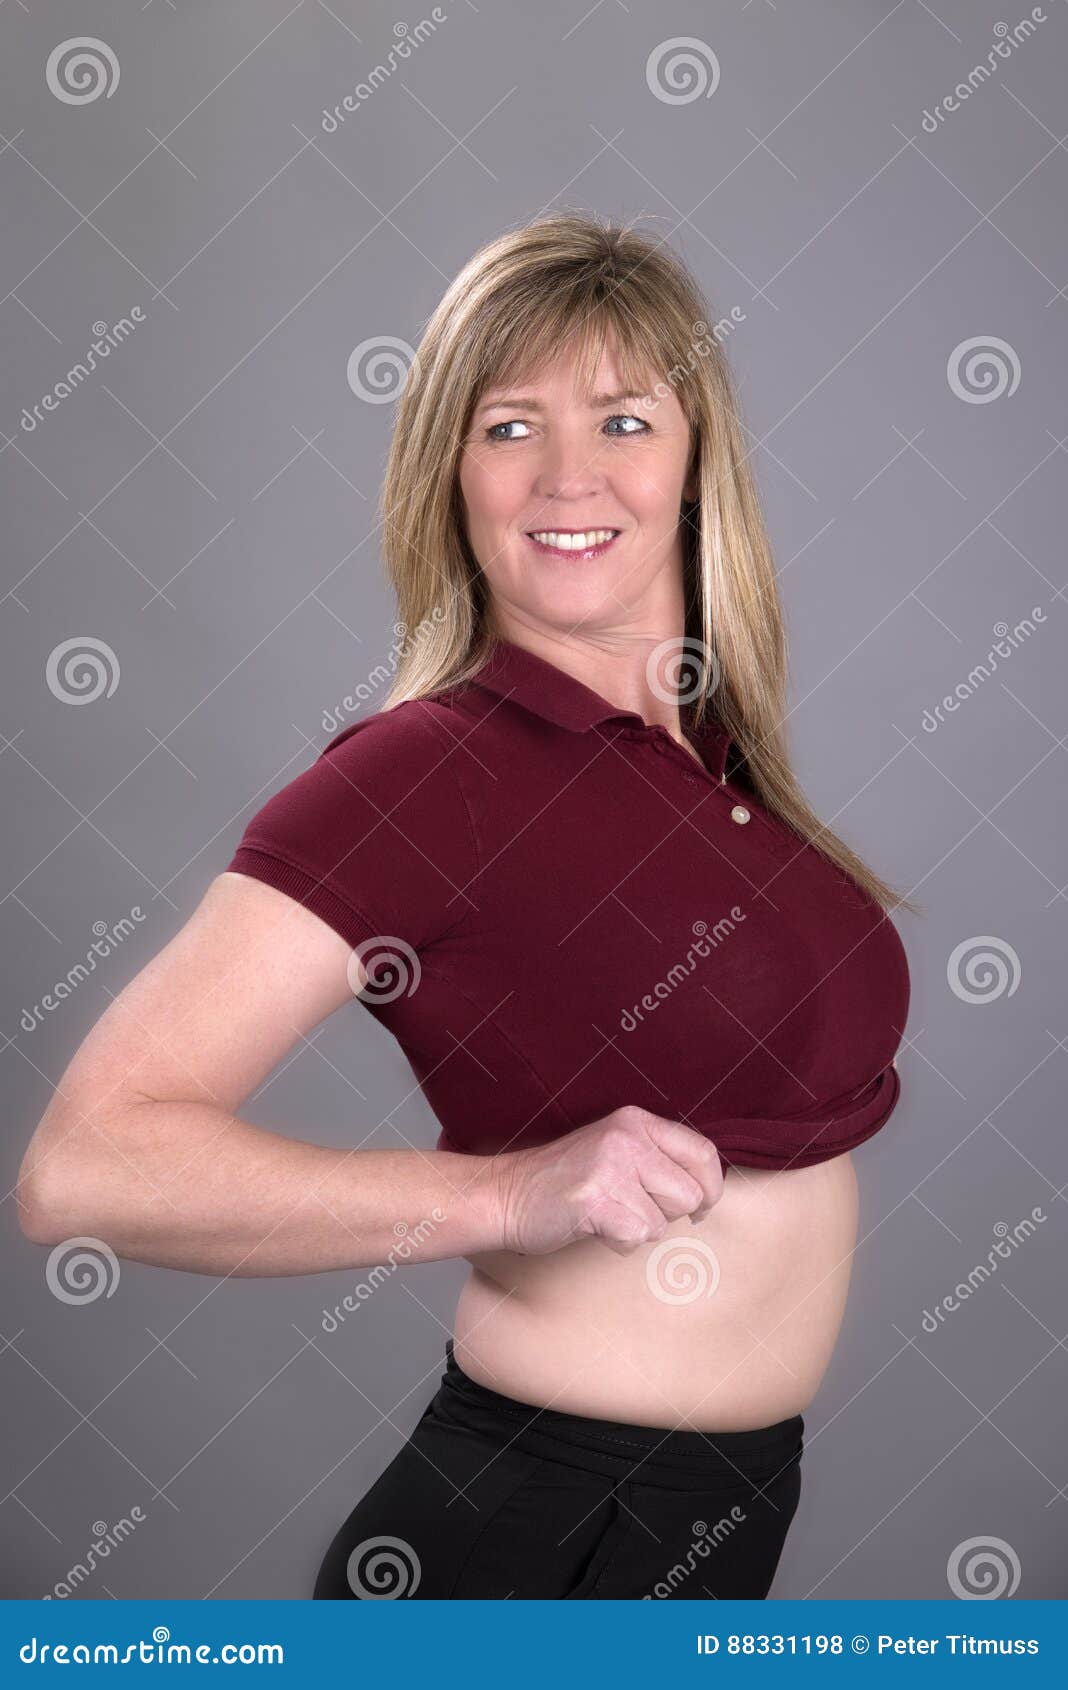 Women wearing tight shirts